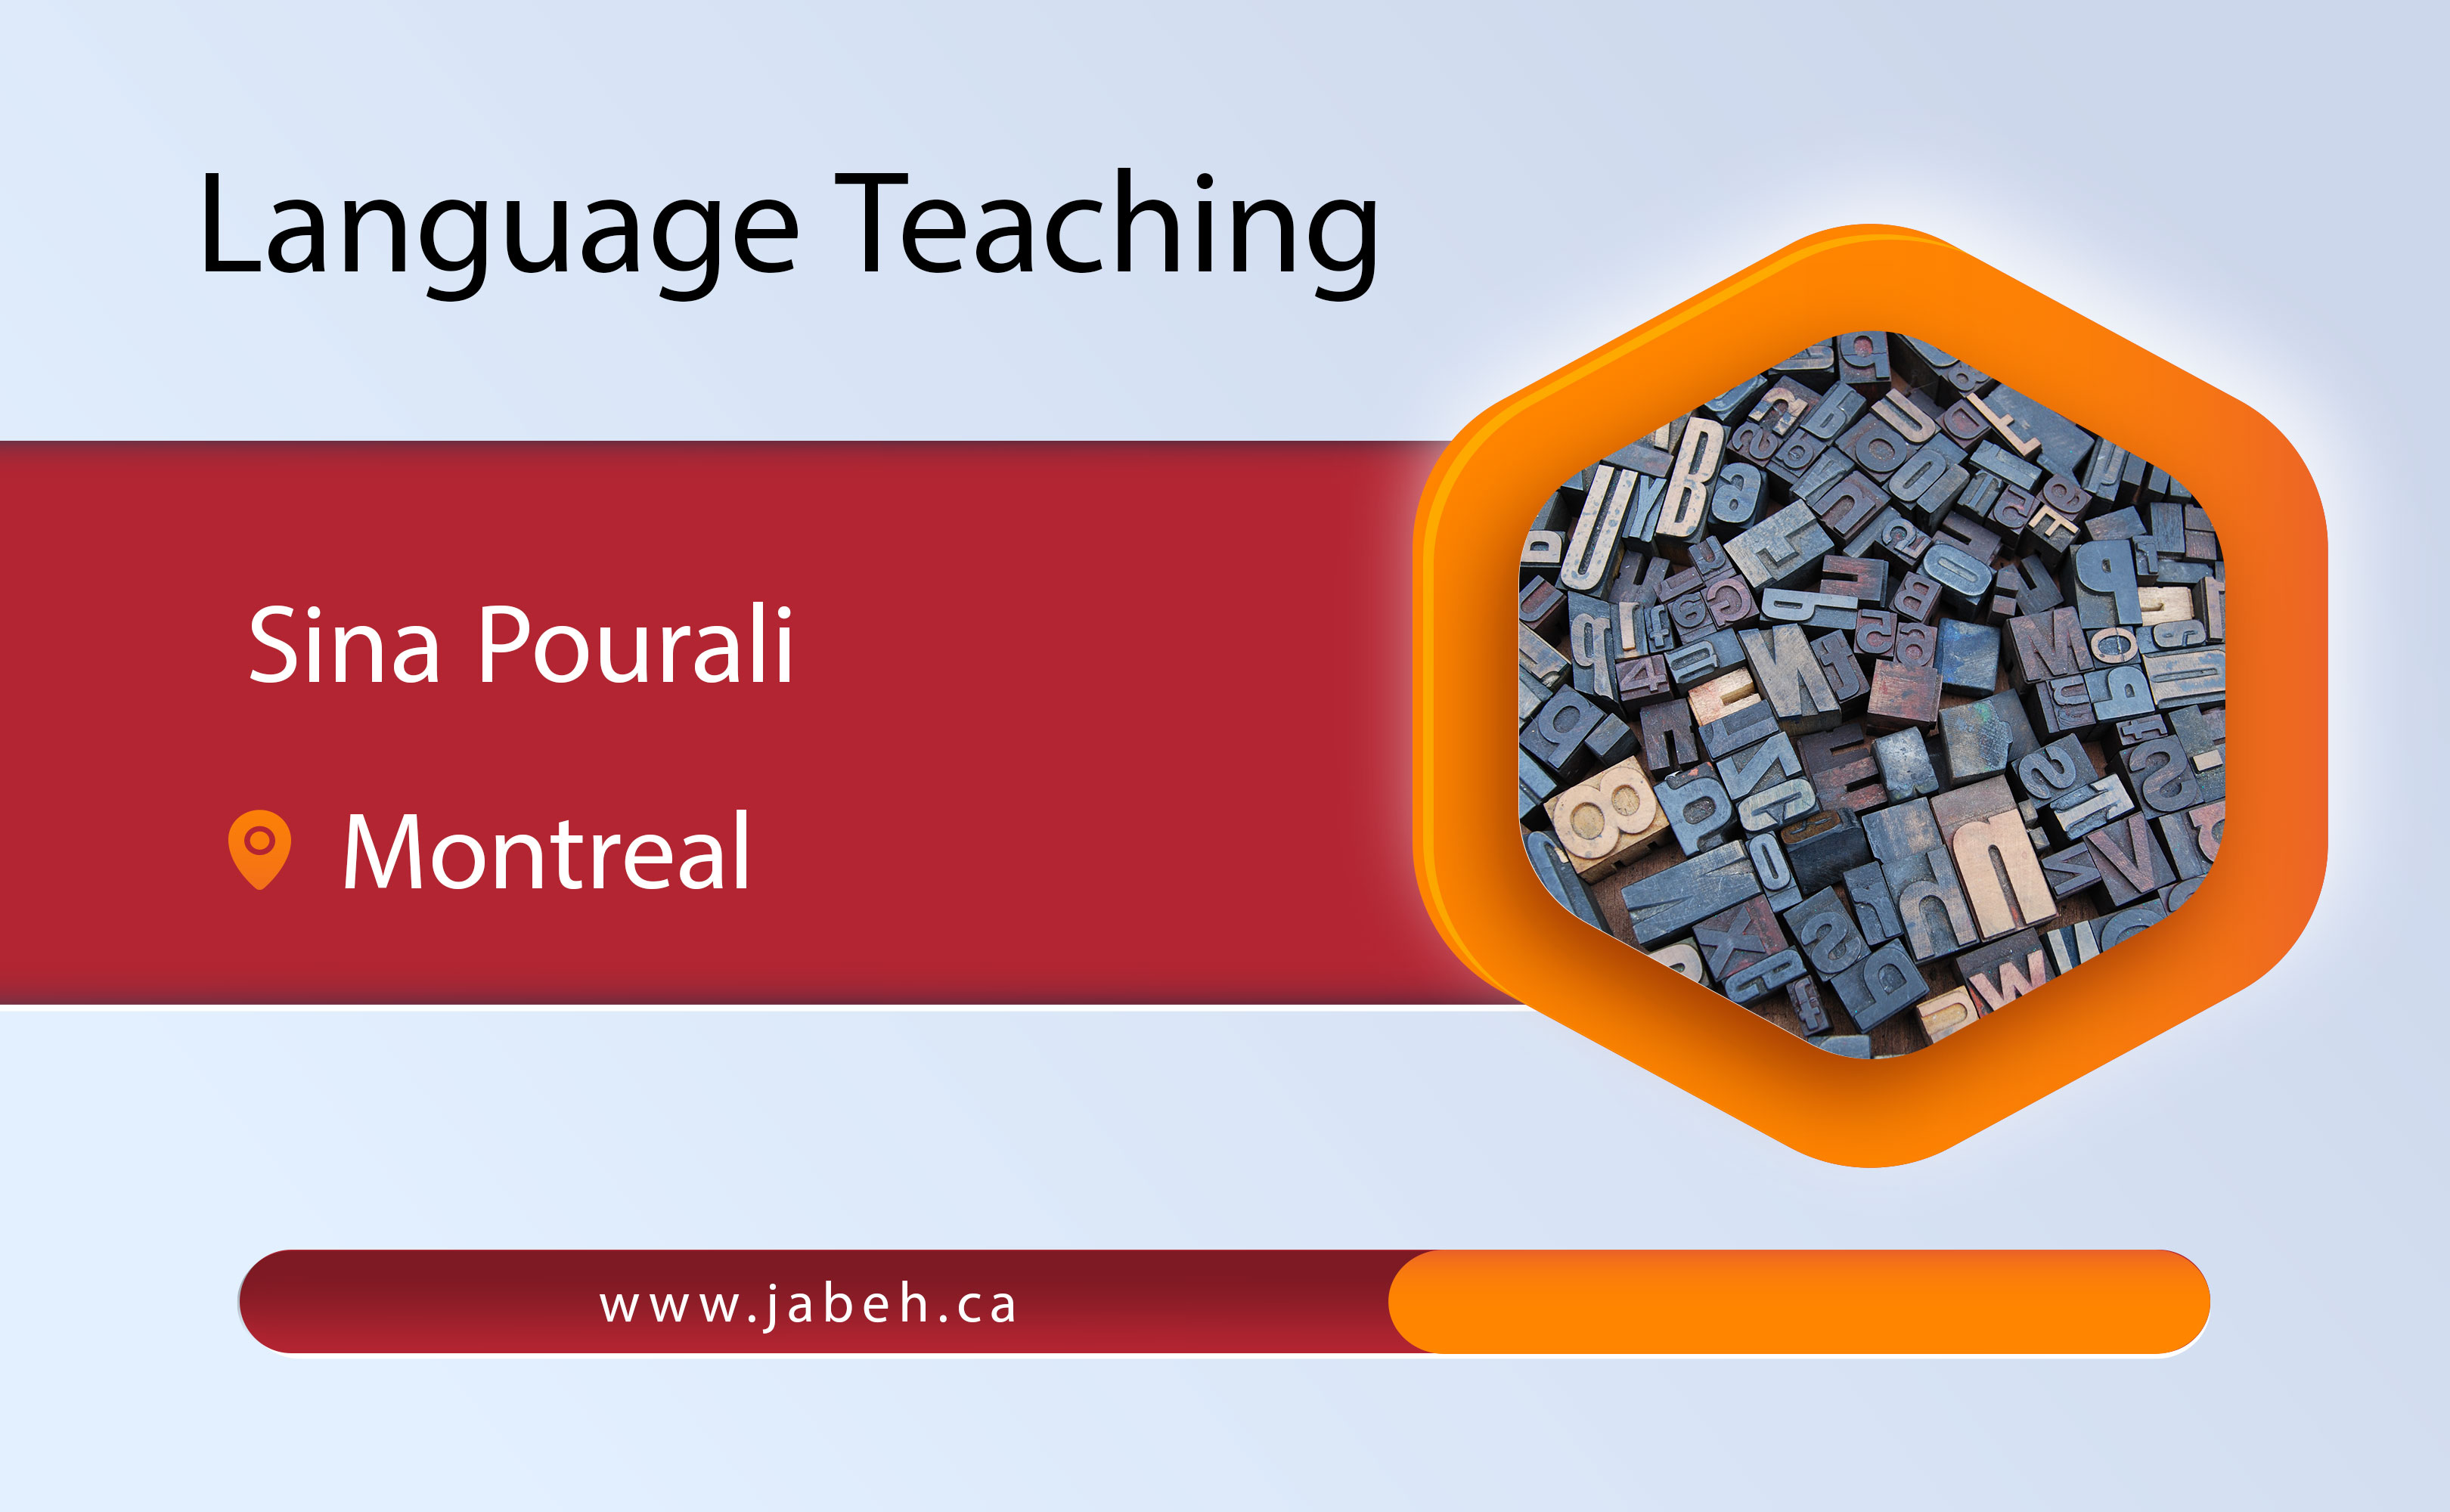 Sina Pourali's language training in Montreal